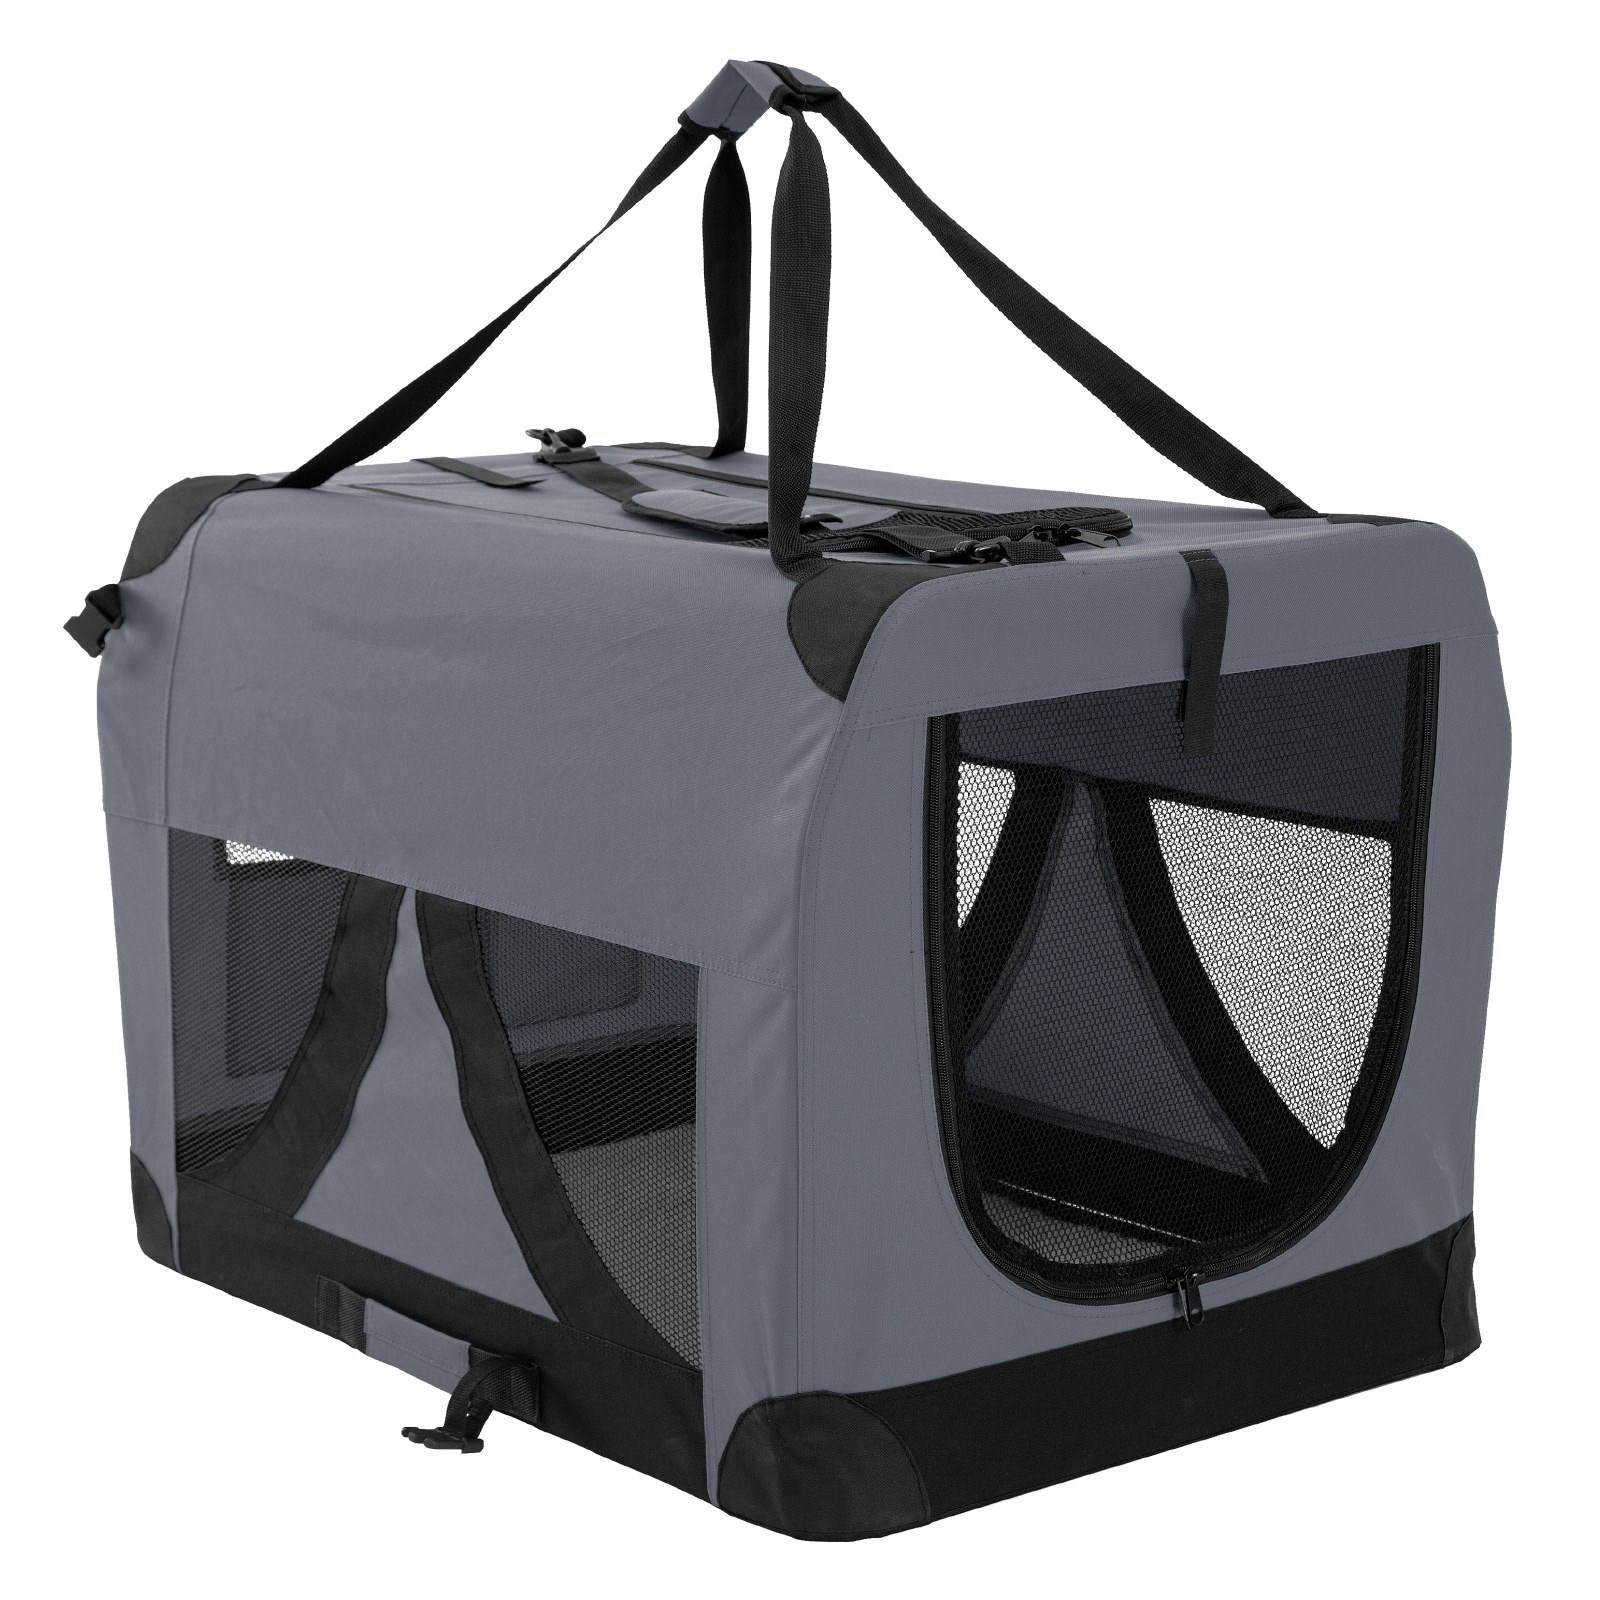 XXXL Portable Soft Dog Crate - GREY